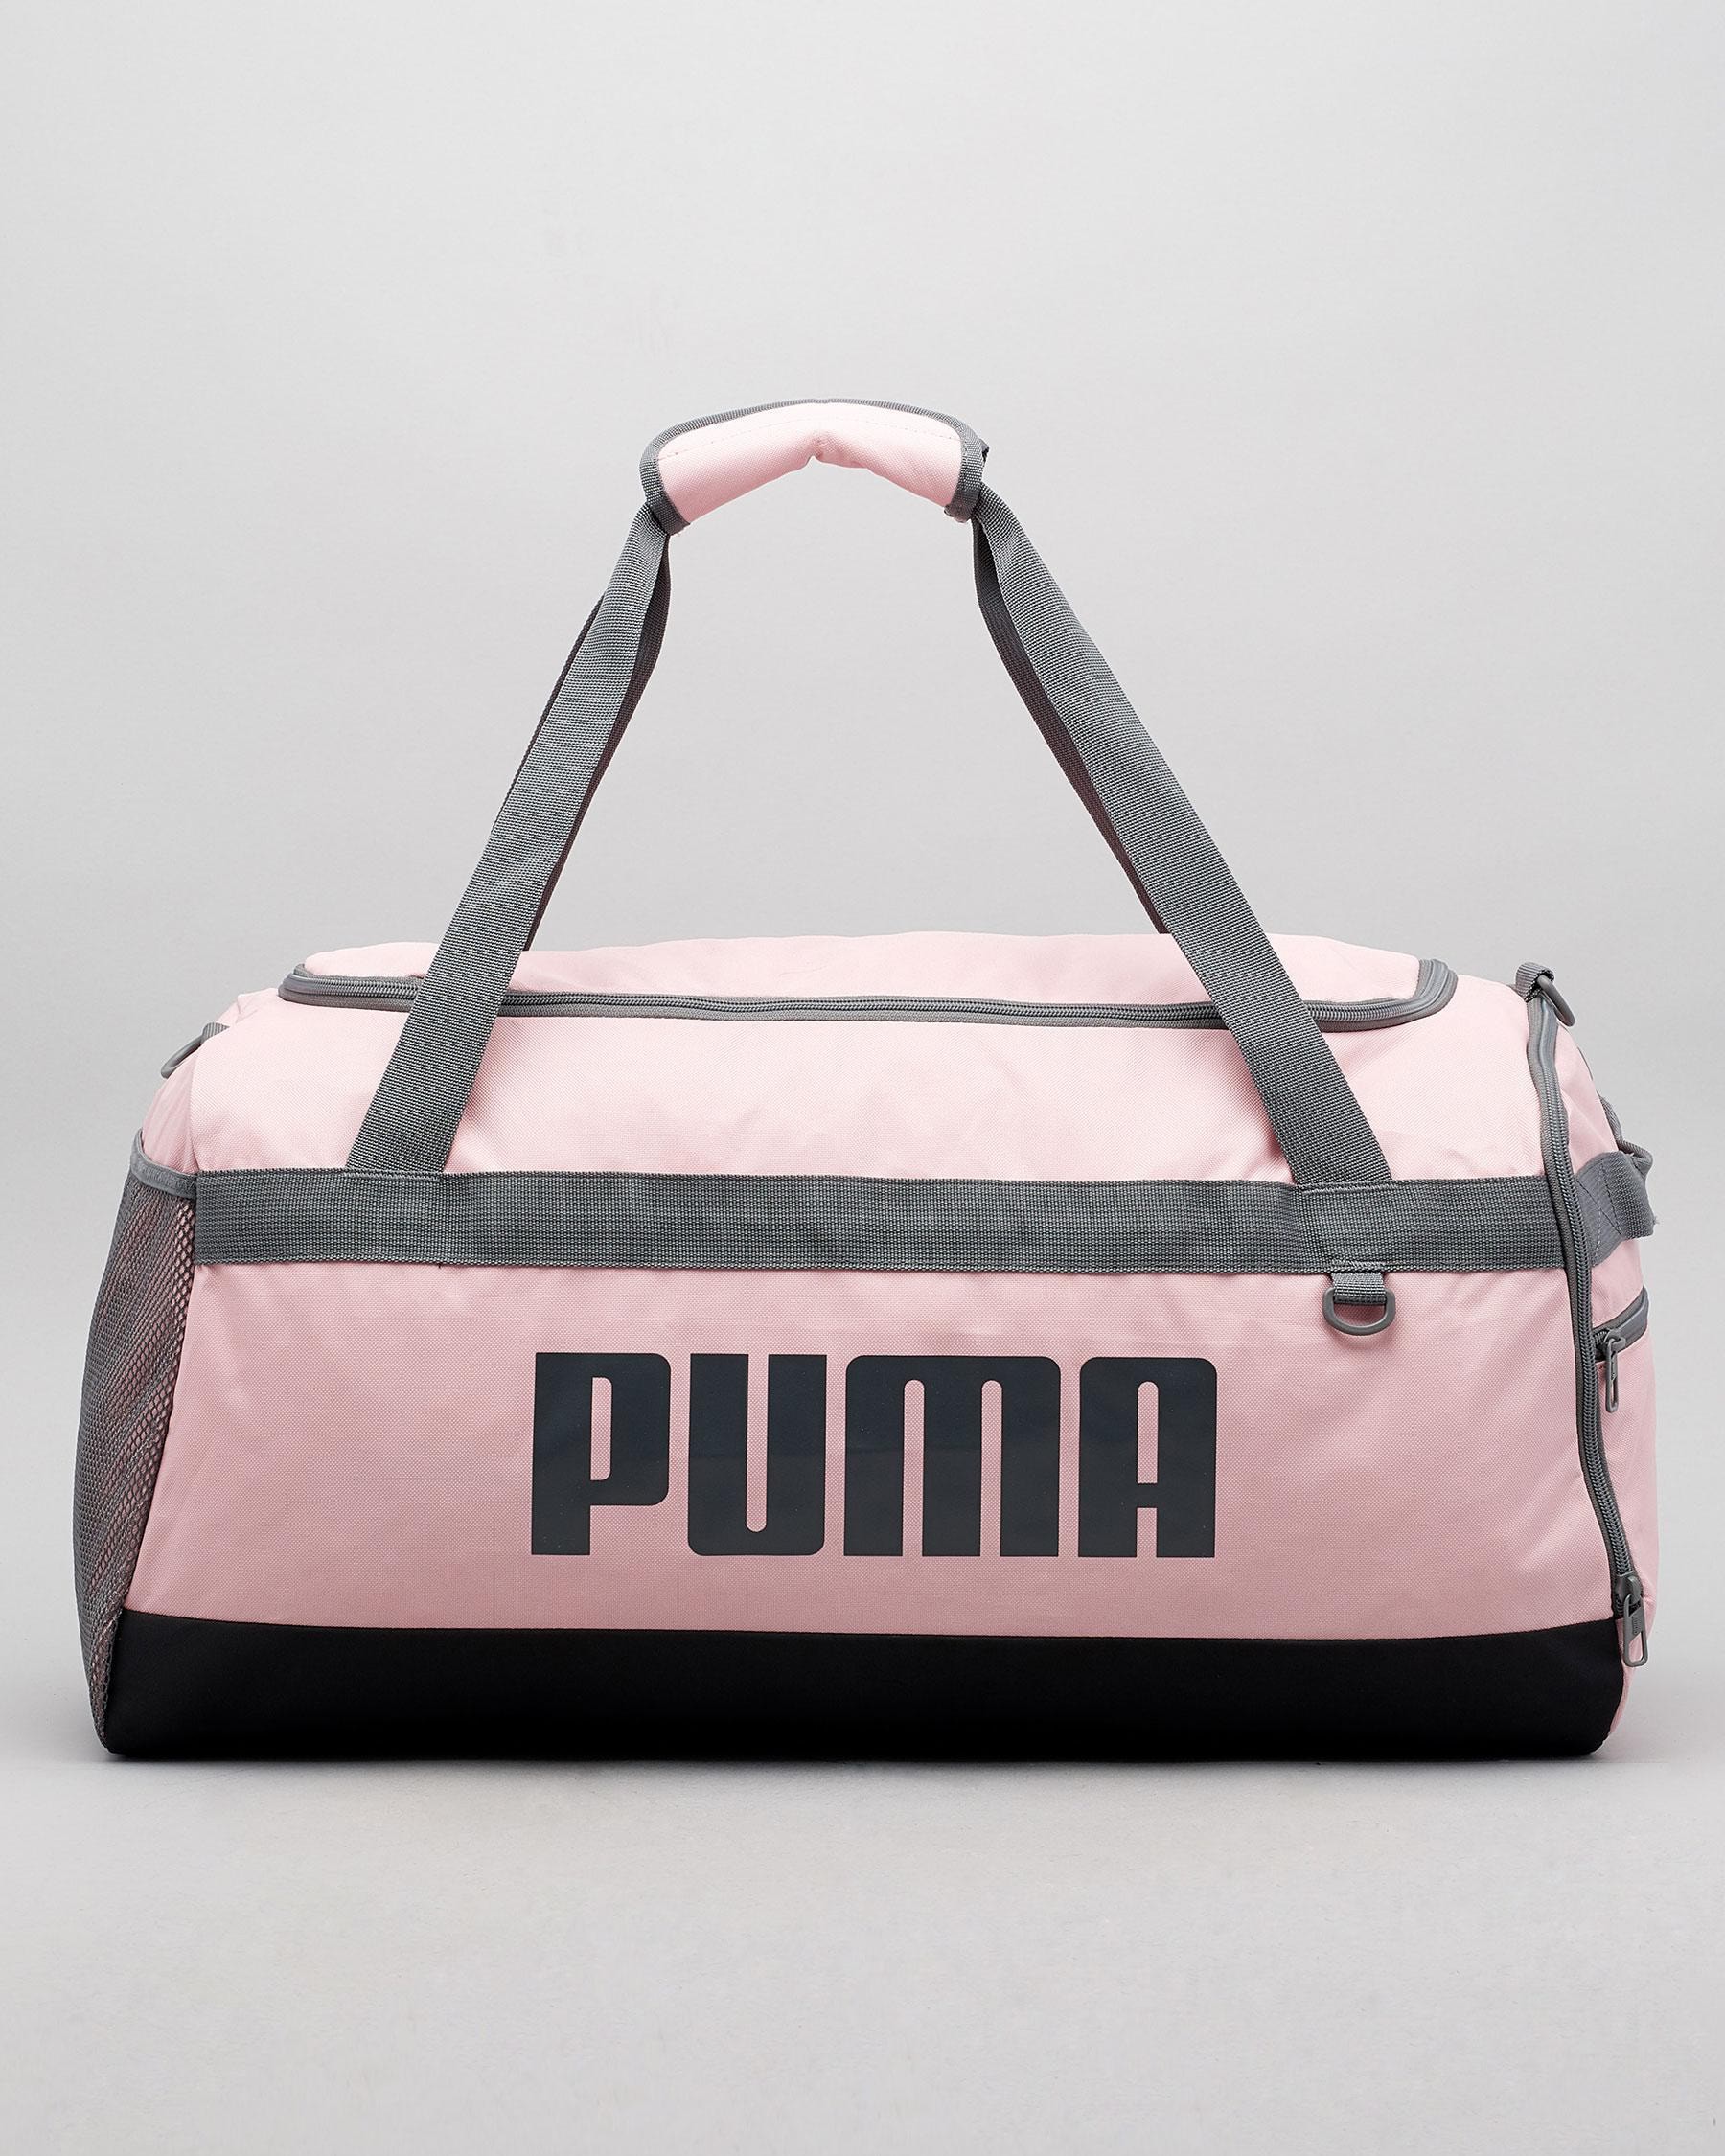 Puma Challenger Travel Bag In Bridal Rose | City Beach United States